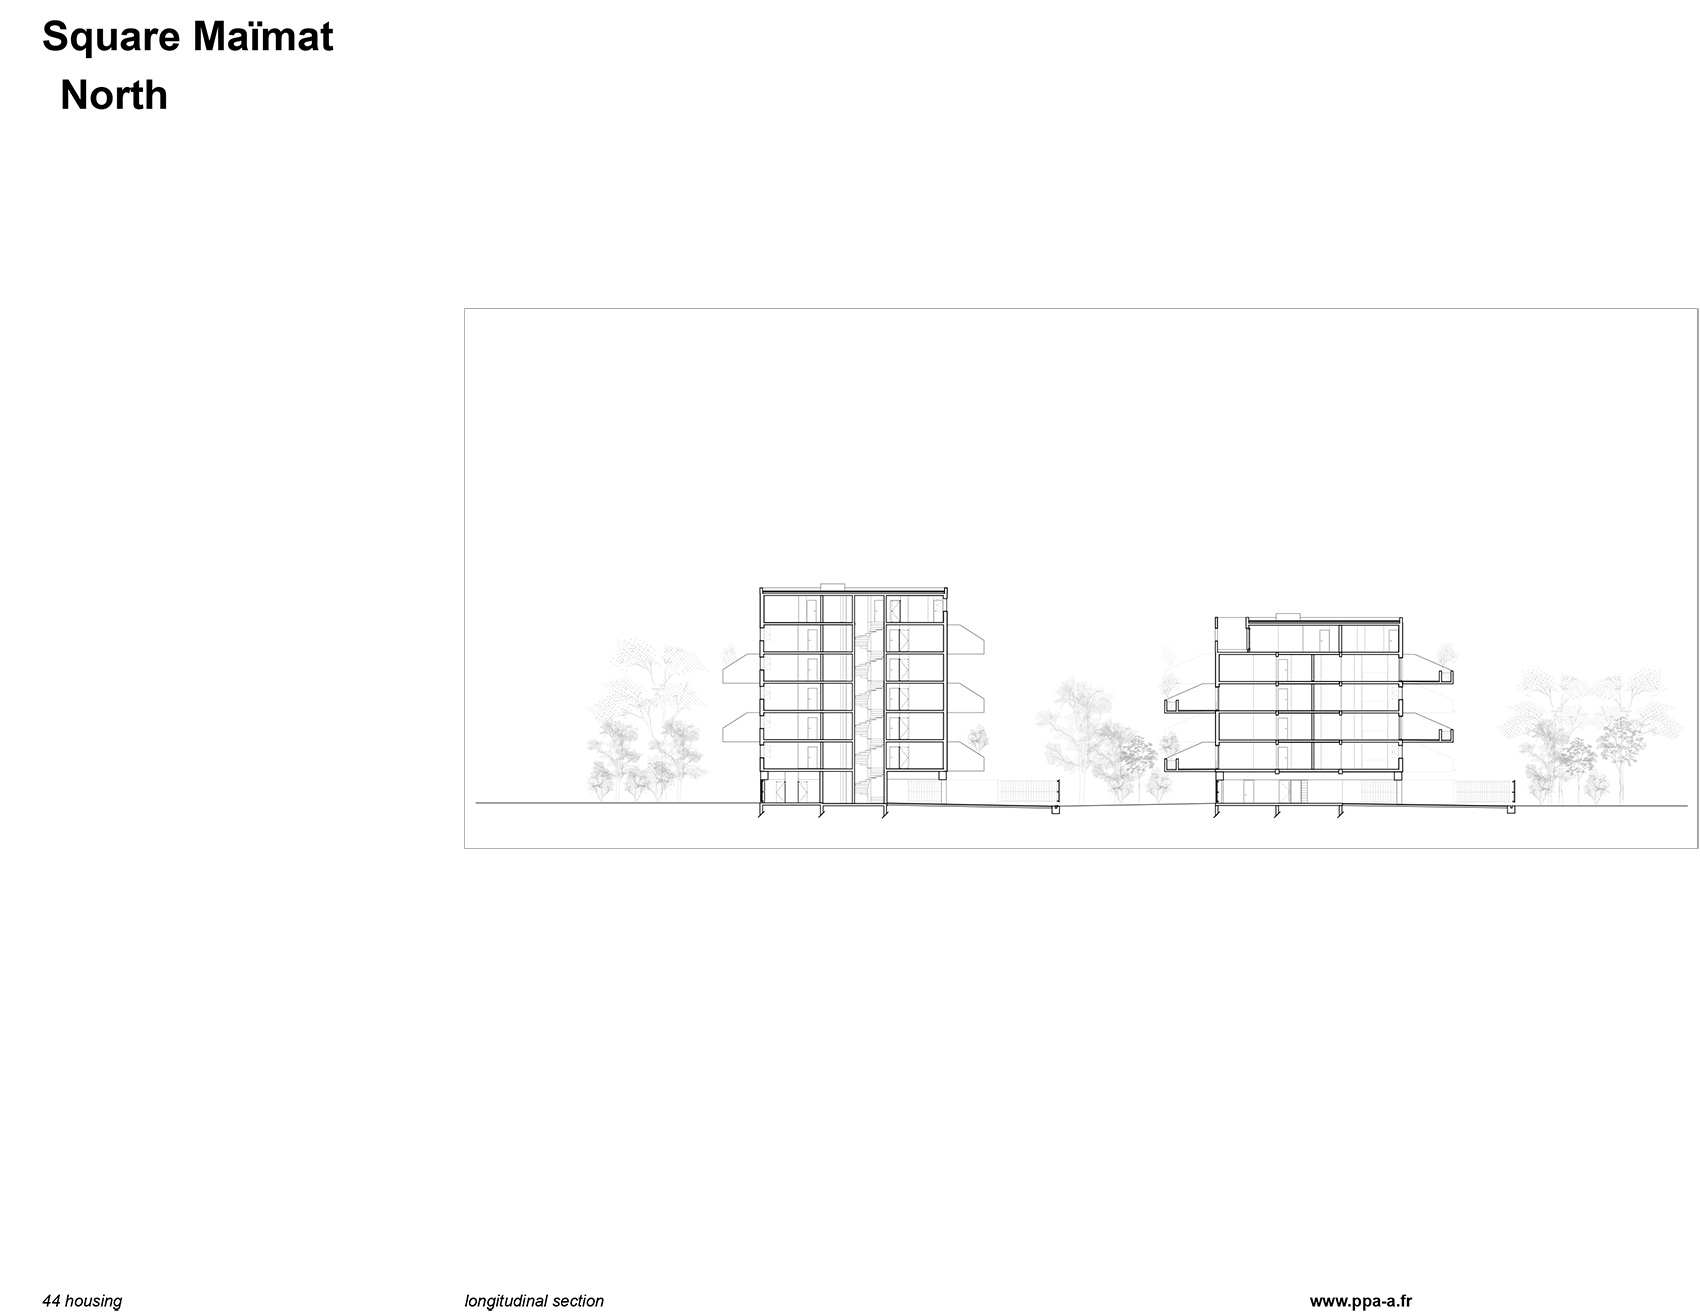 Square Maïmat住宅区更新，法国/释放公共空间，连接社区居民-119